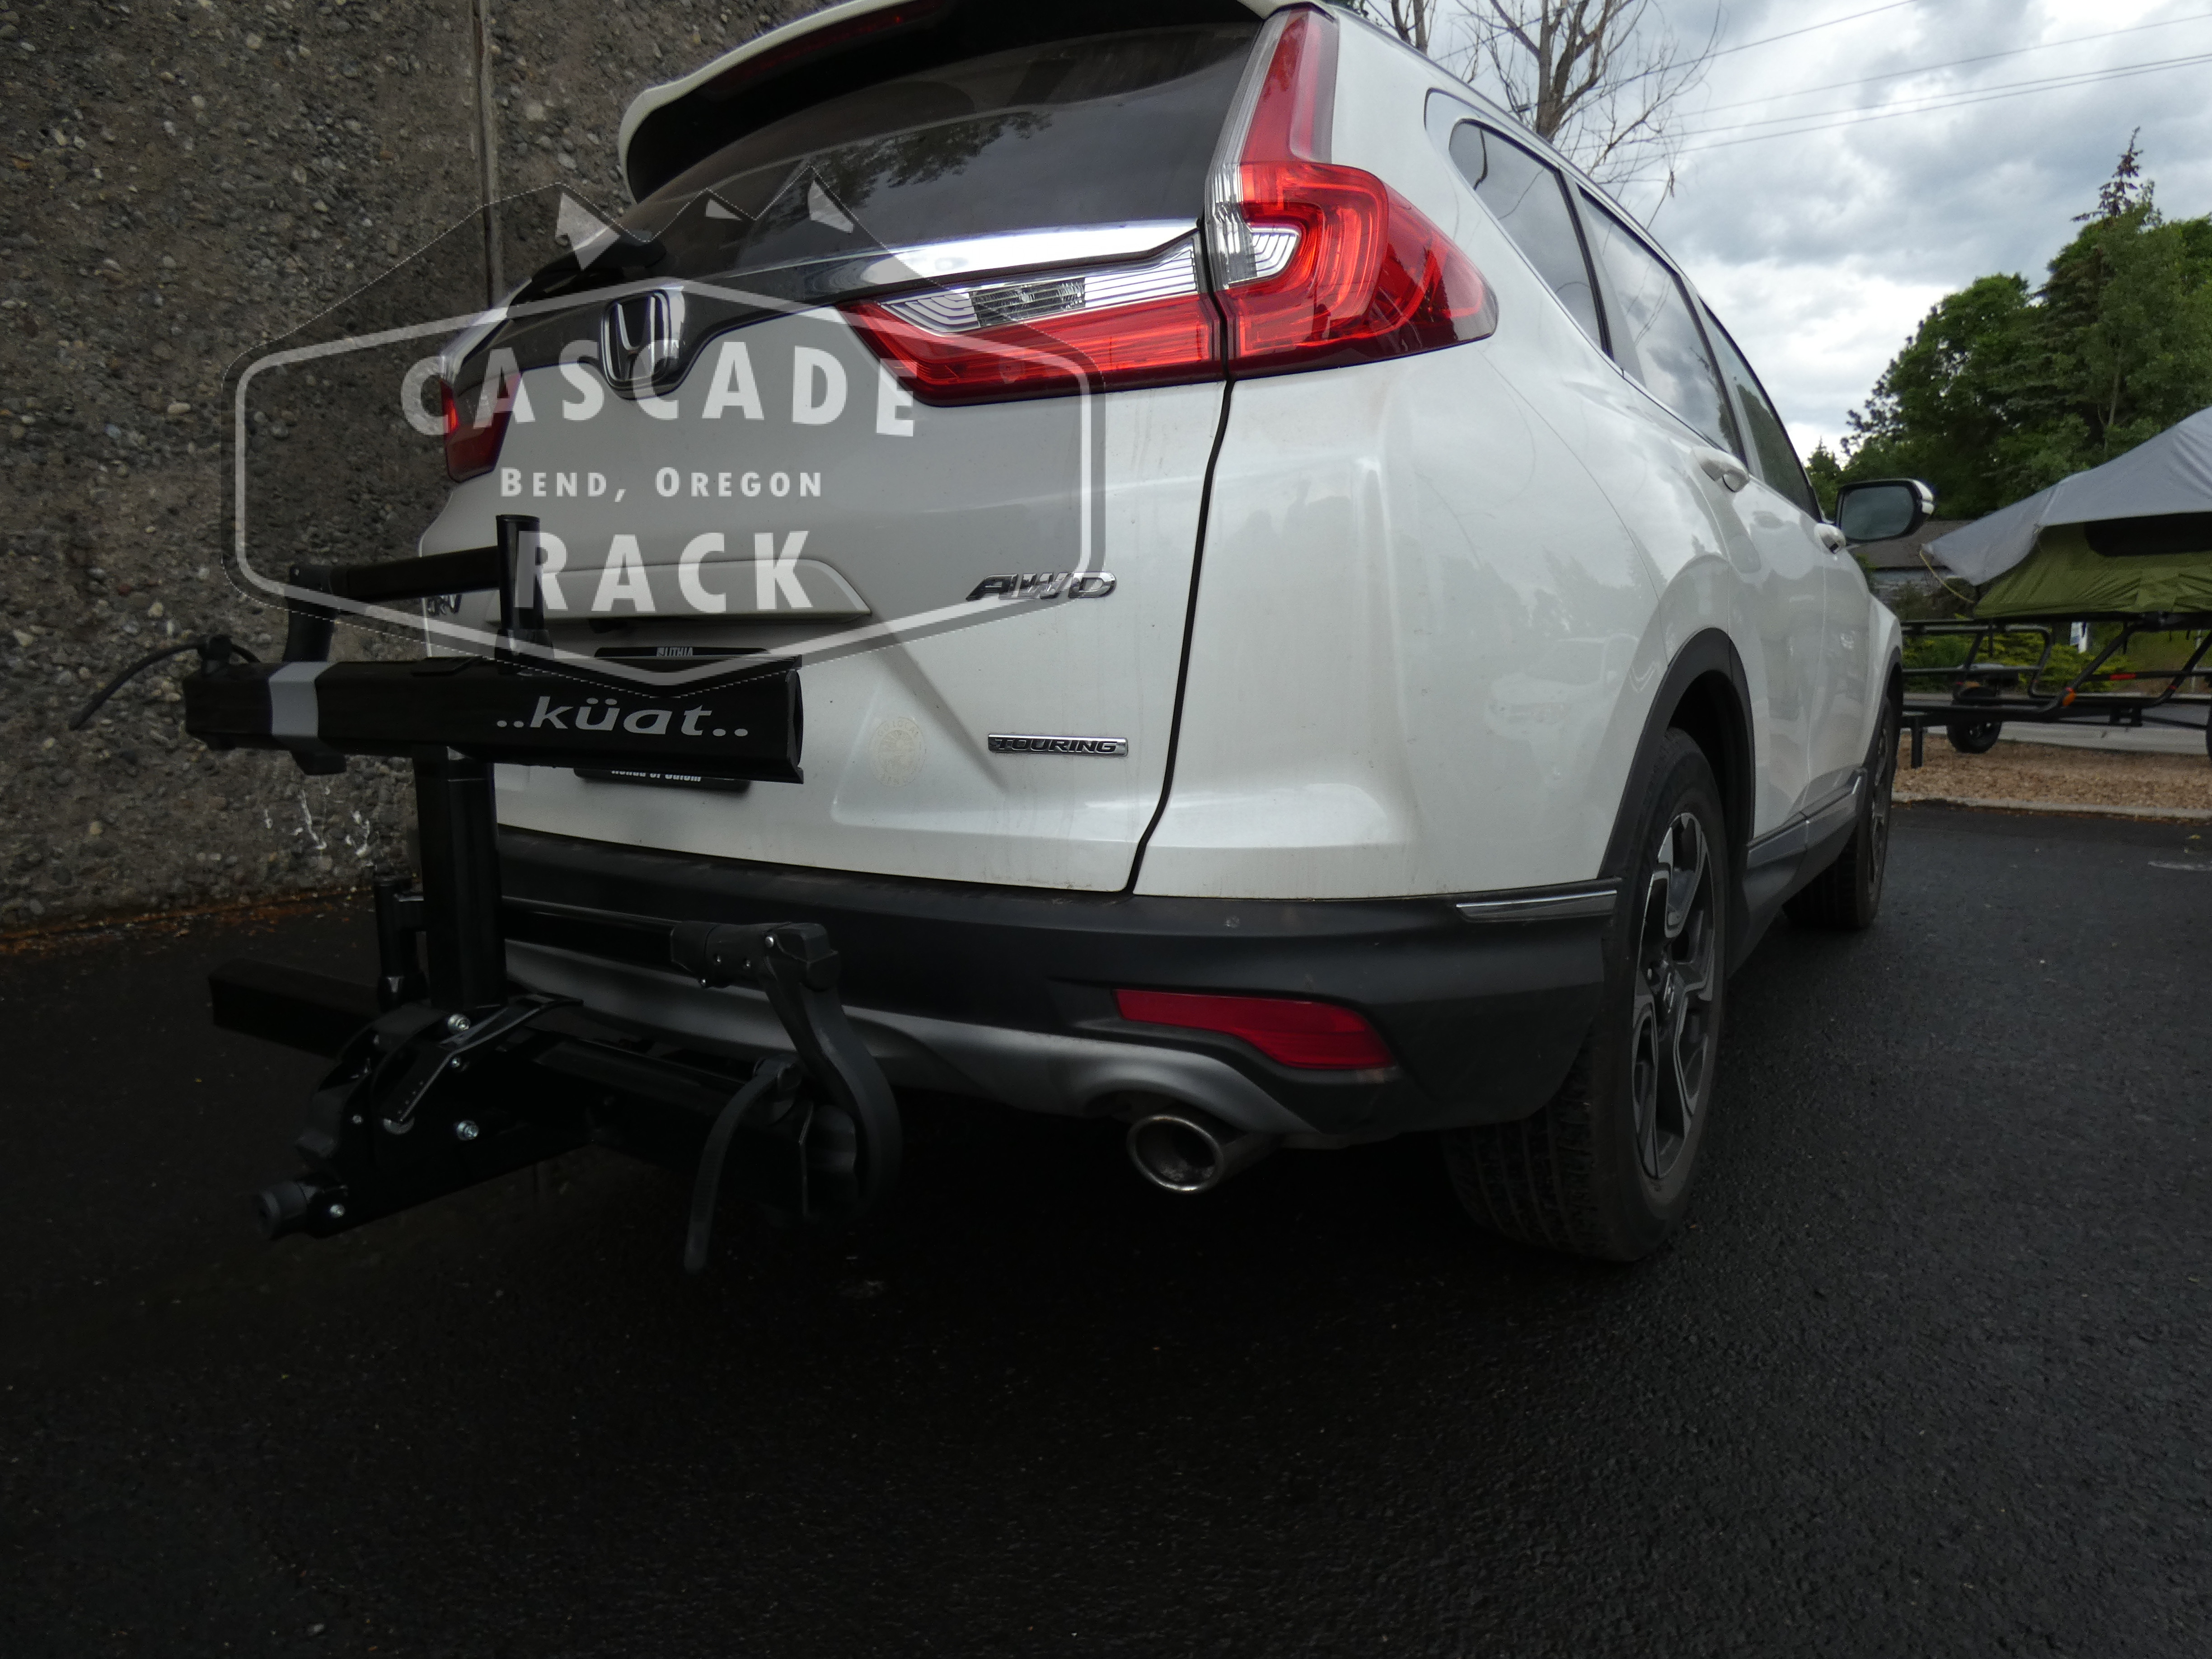 2018 Honda CRV - Hitch Receiver and Bike Rack - Curt / Kuat